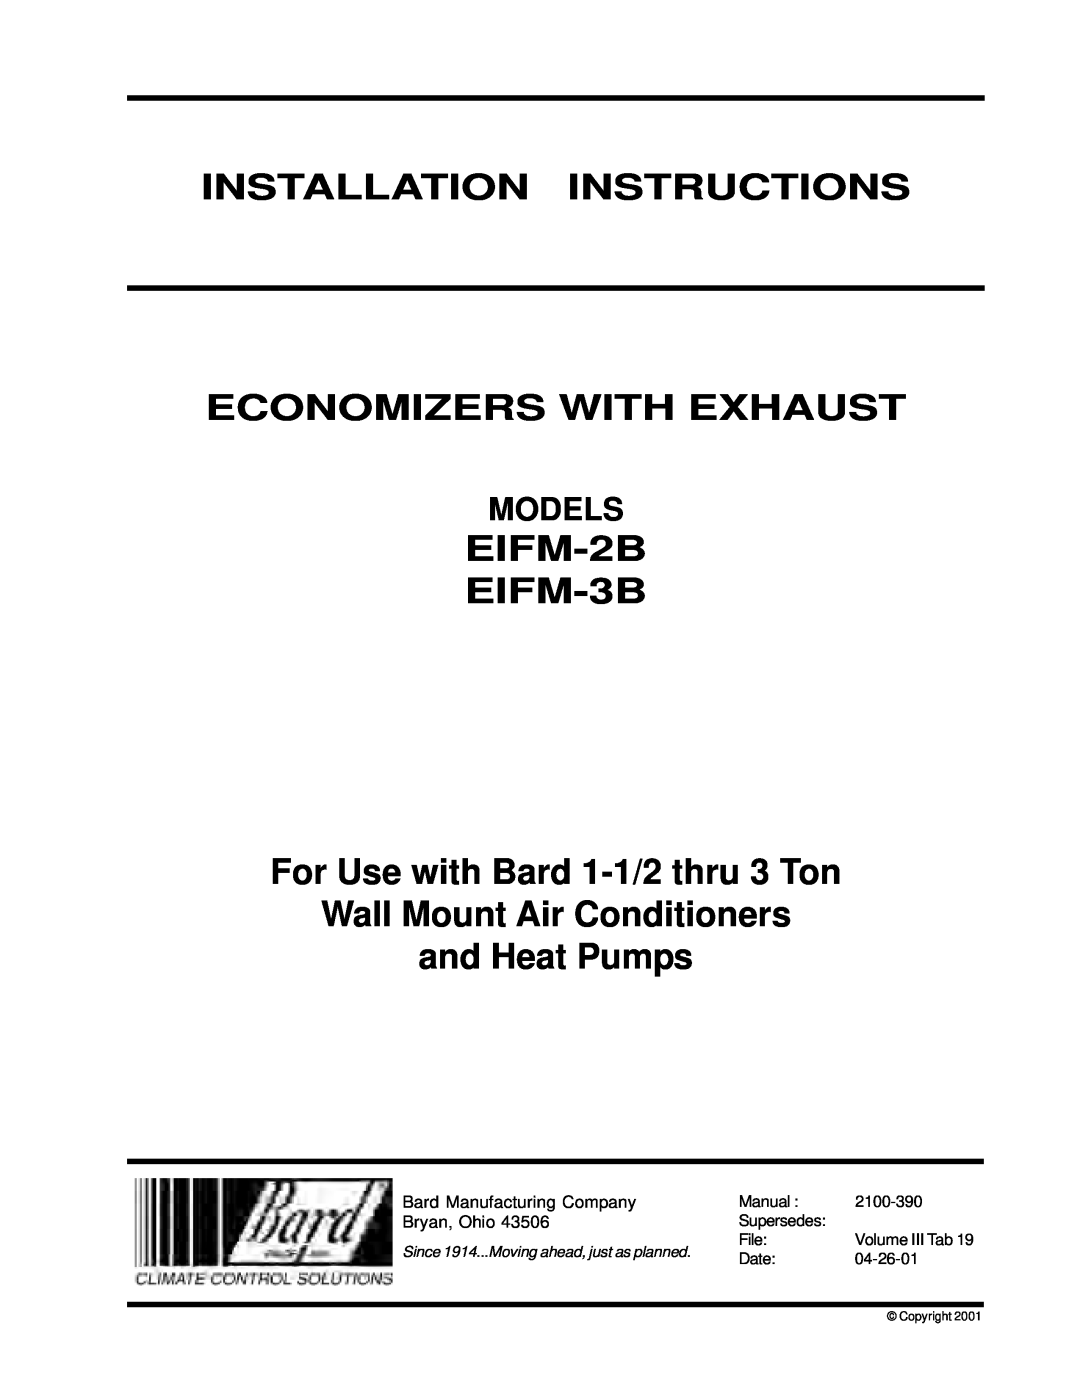 Bard EIFM-3B, EIFM-2B installation instructions Models, Bard Manufacturing Company, Bryan, Ohio, Installation Instructions 